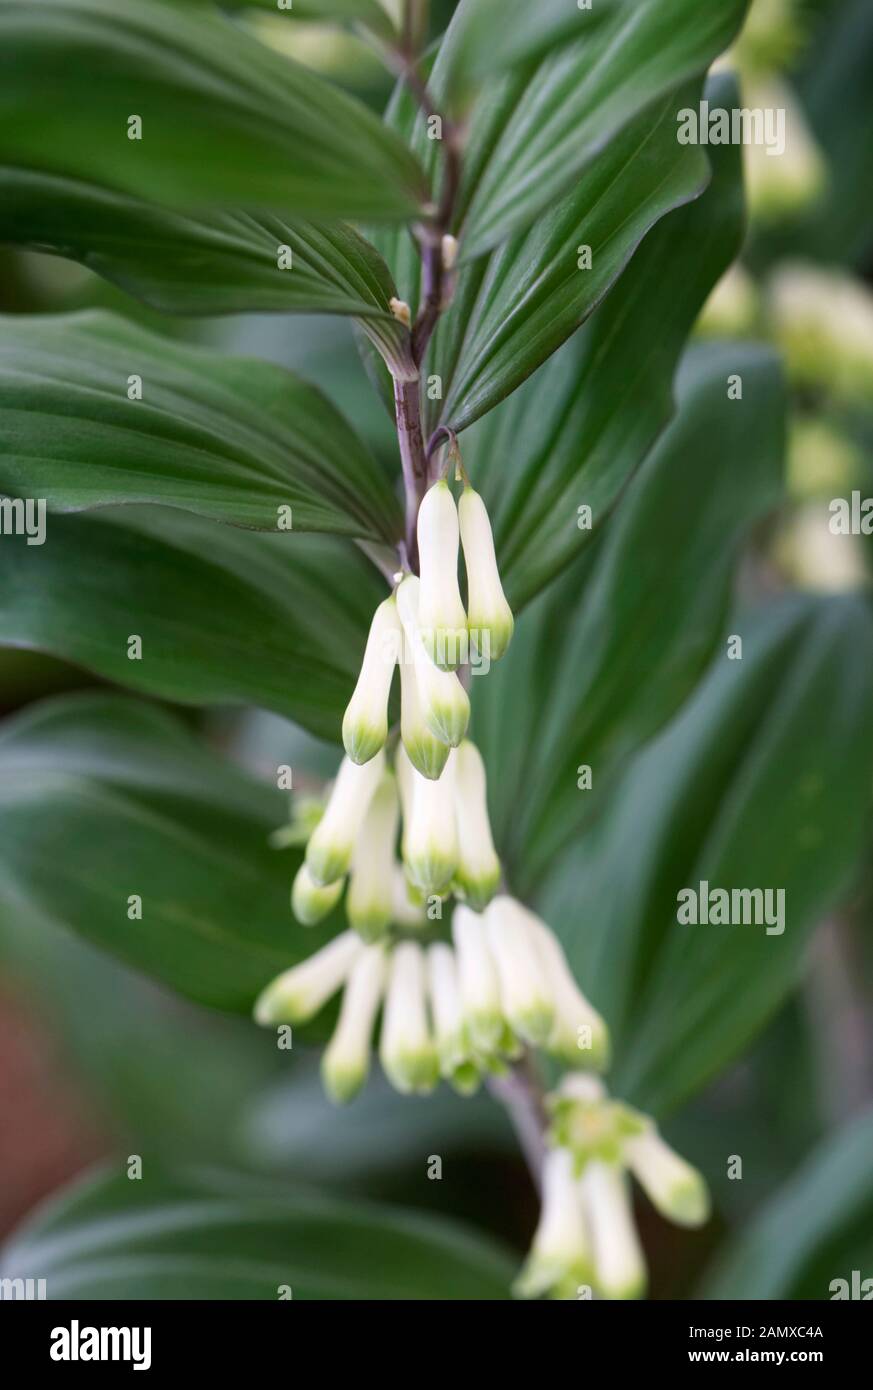 Polygonatum x hybridum 'Betberg' flowers. Solomon’s Seal ‘Betberg’ Stock Photo